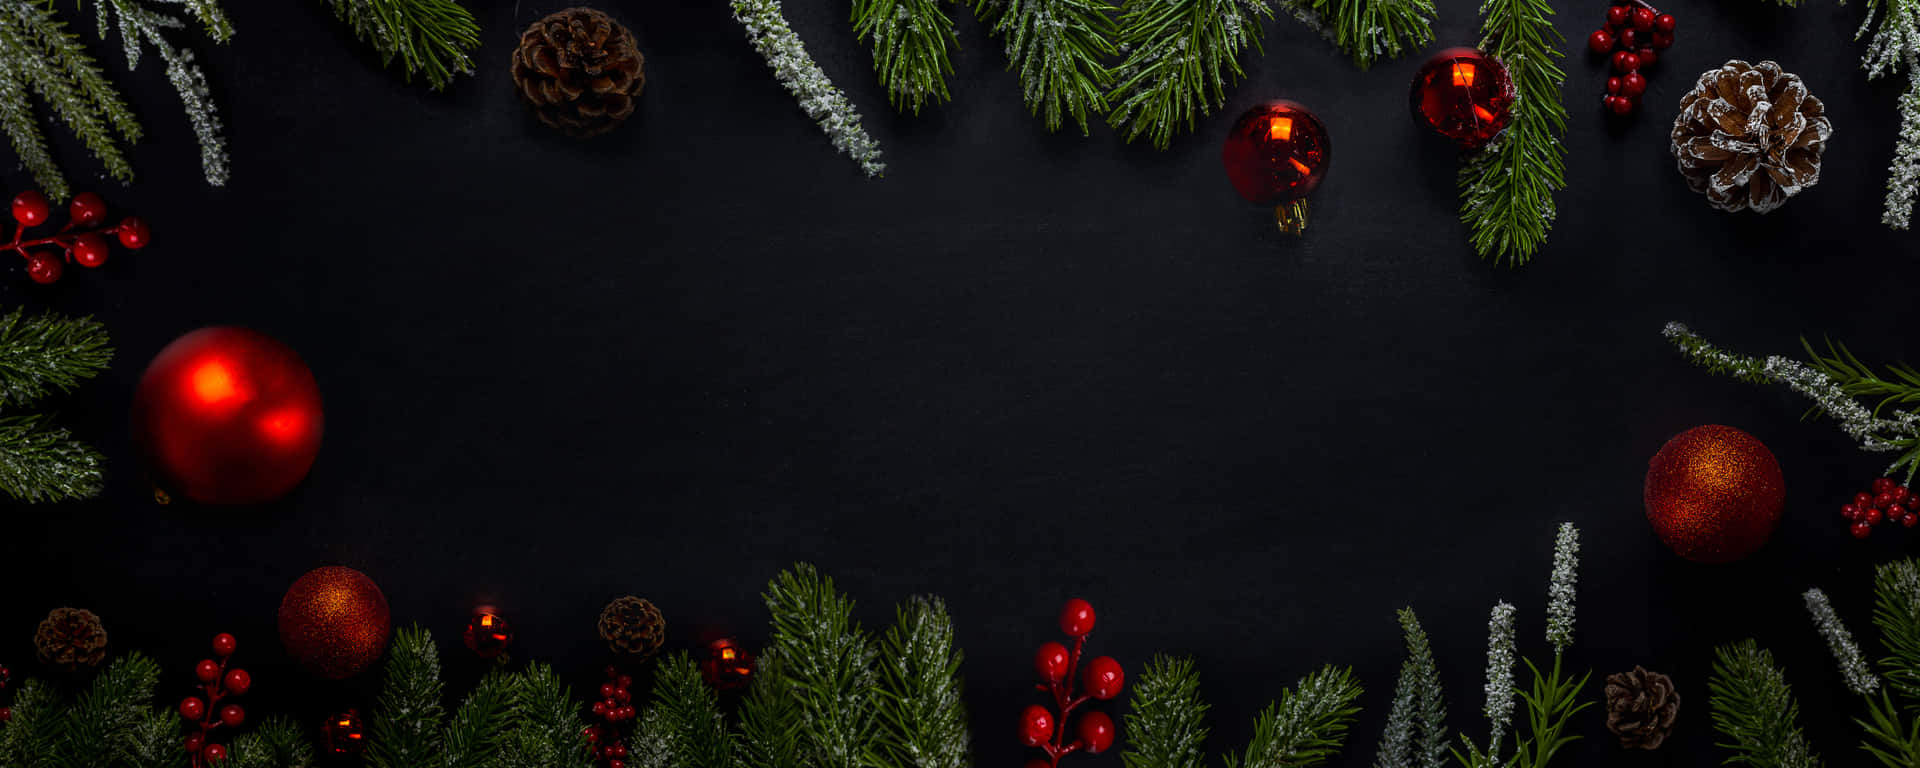 Black Christmas Background